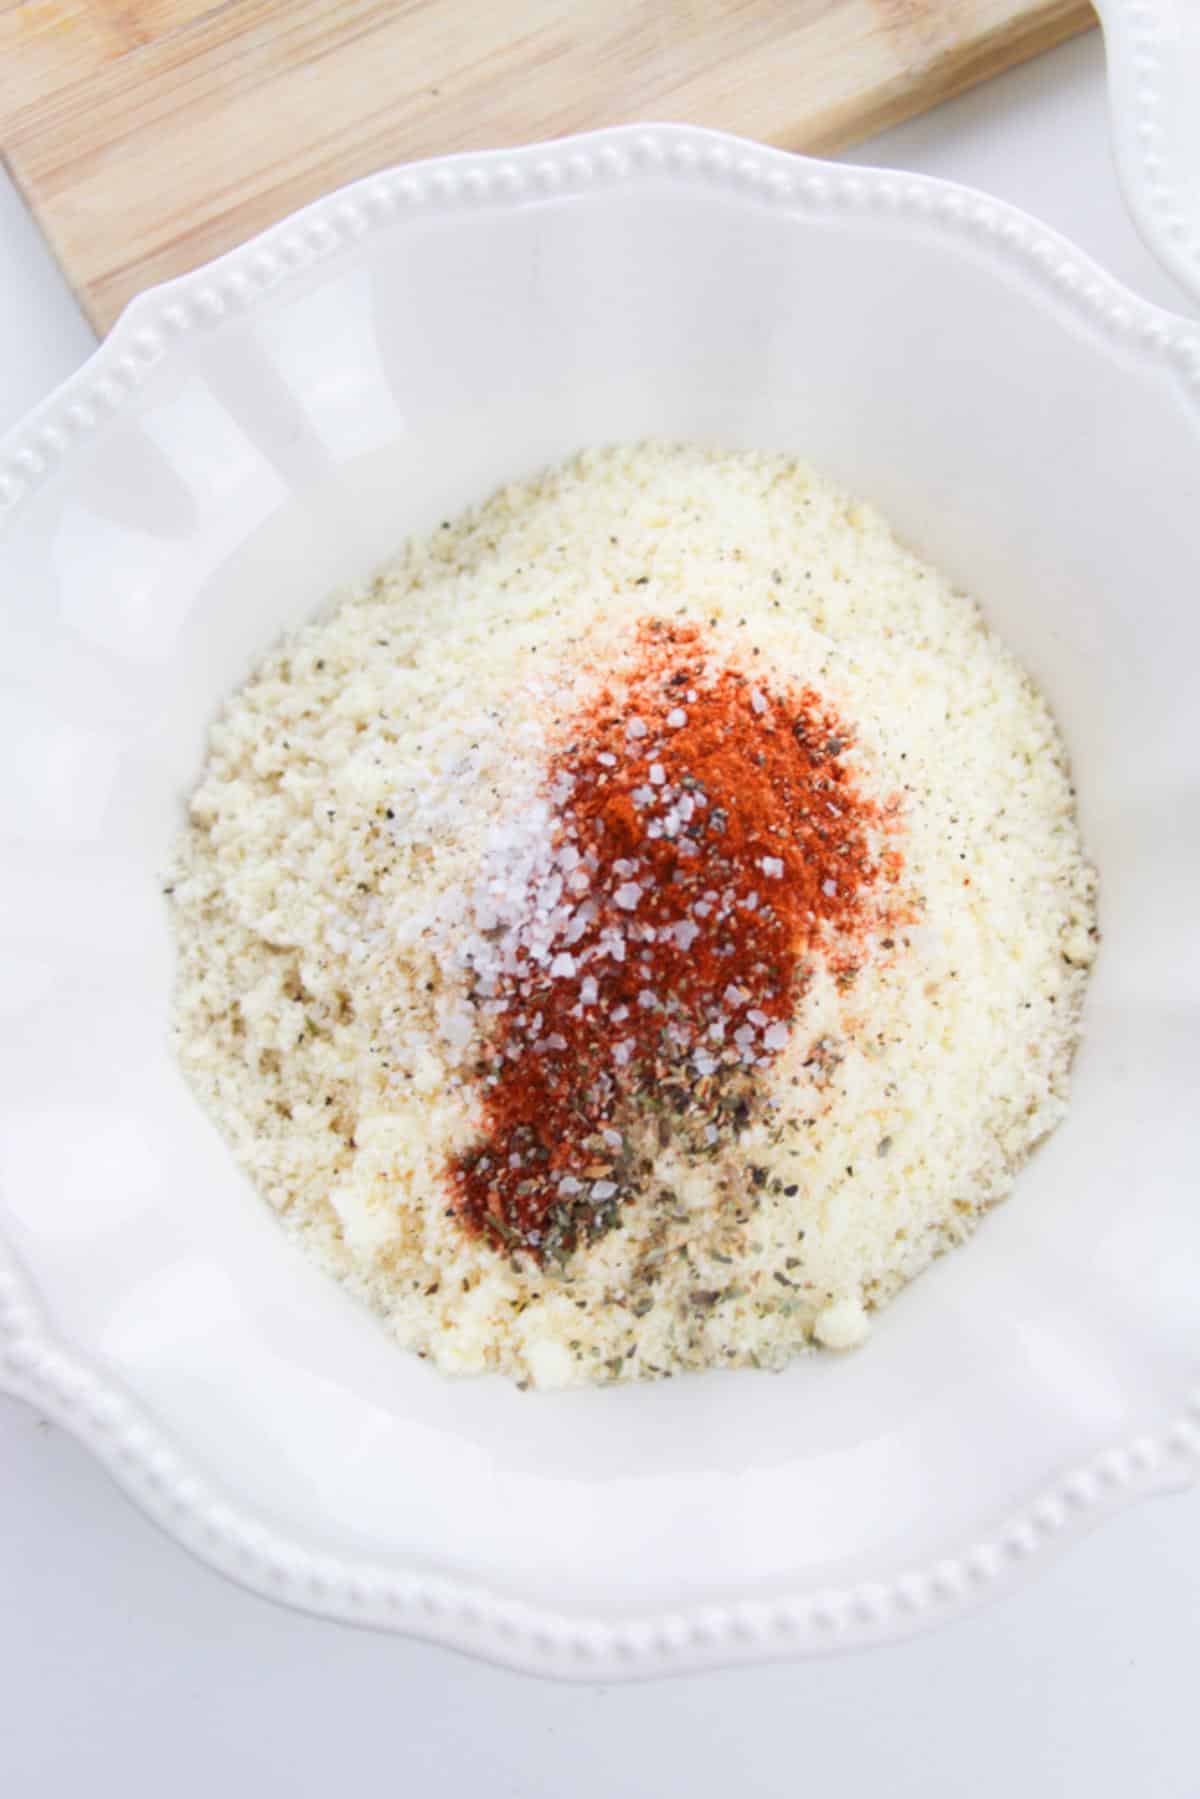 Panko breadcrumbs and seasonings in a white bowl.